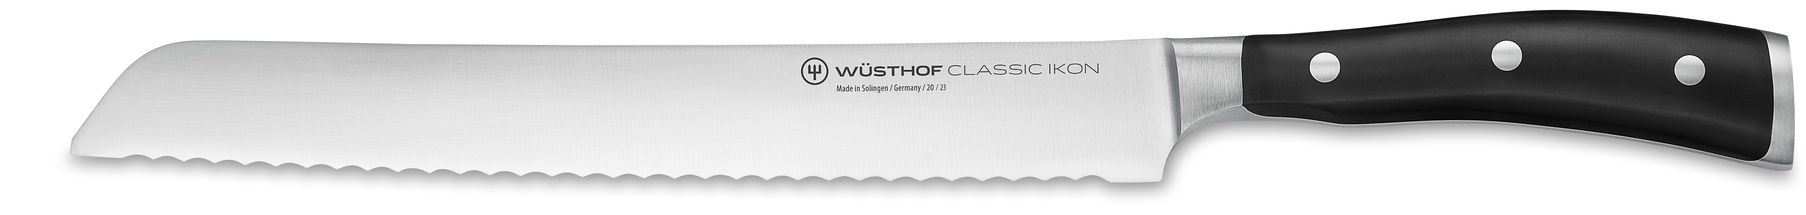 Wusthof Bread Knife Classic Ikon 23 cm